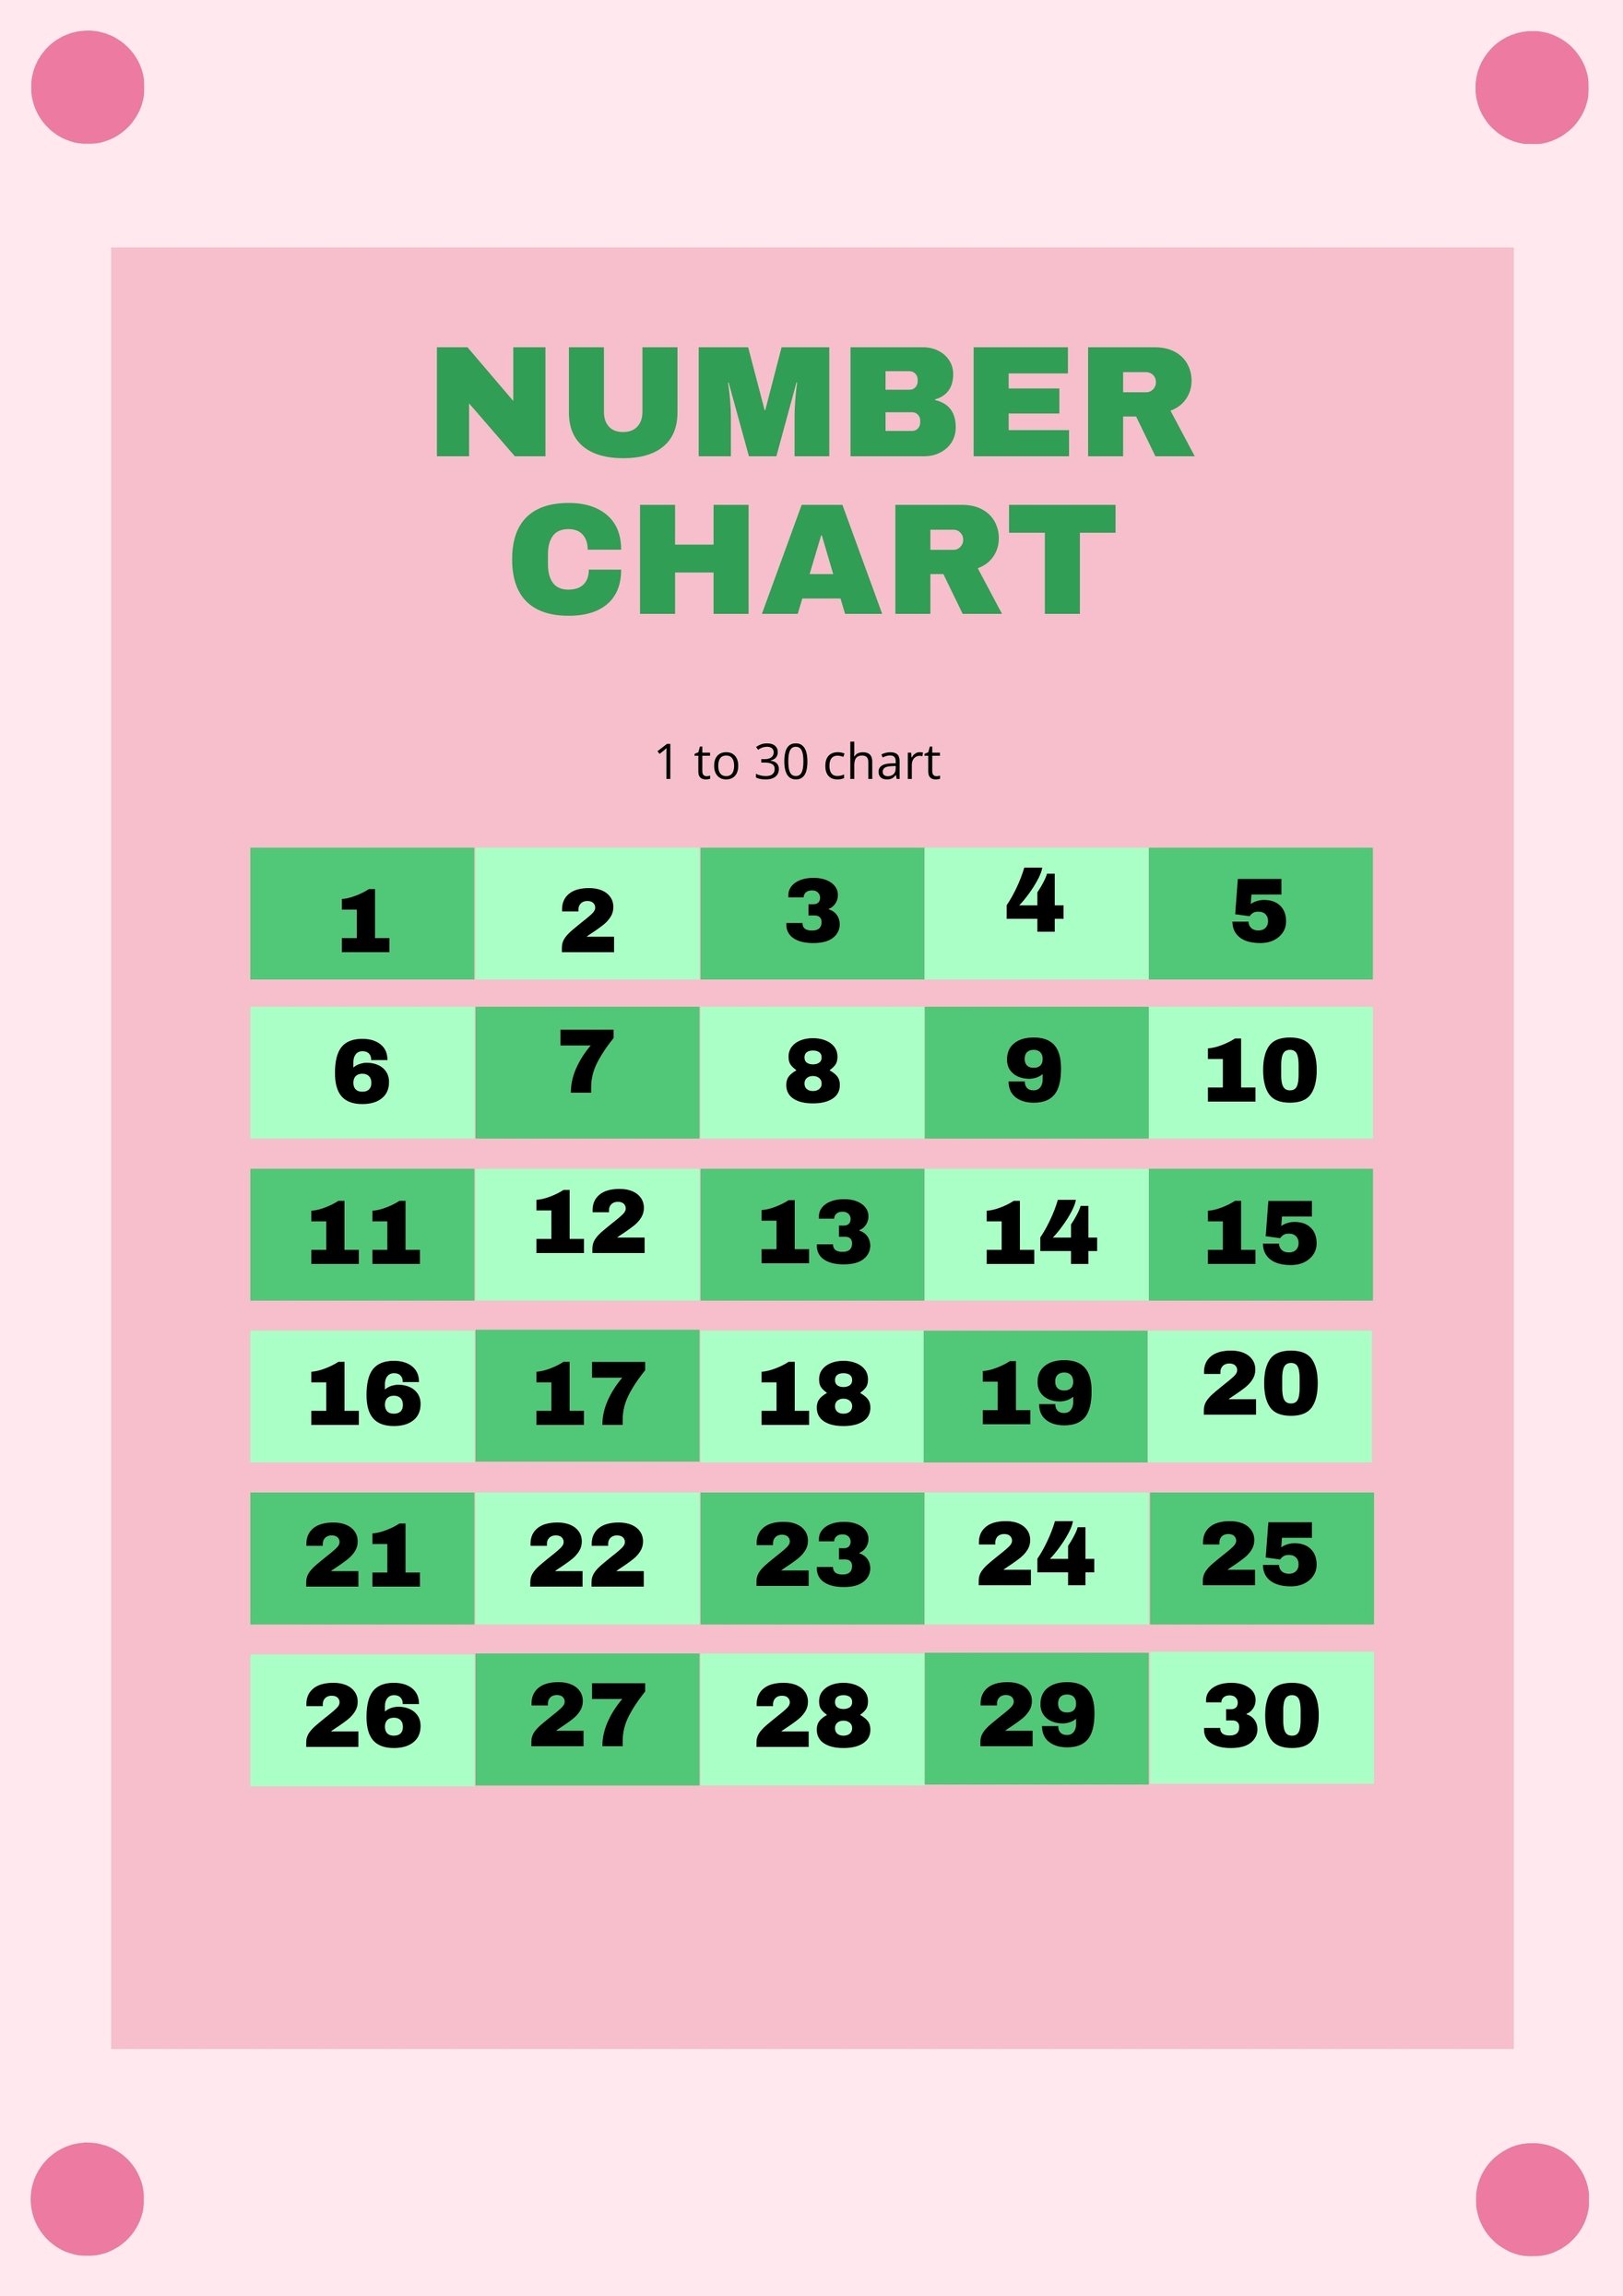 Number Chart In Illustrator Pdf Download